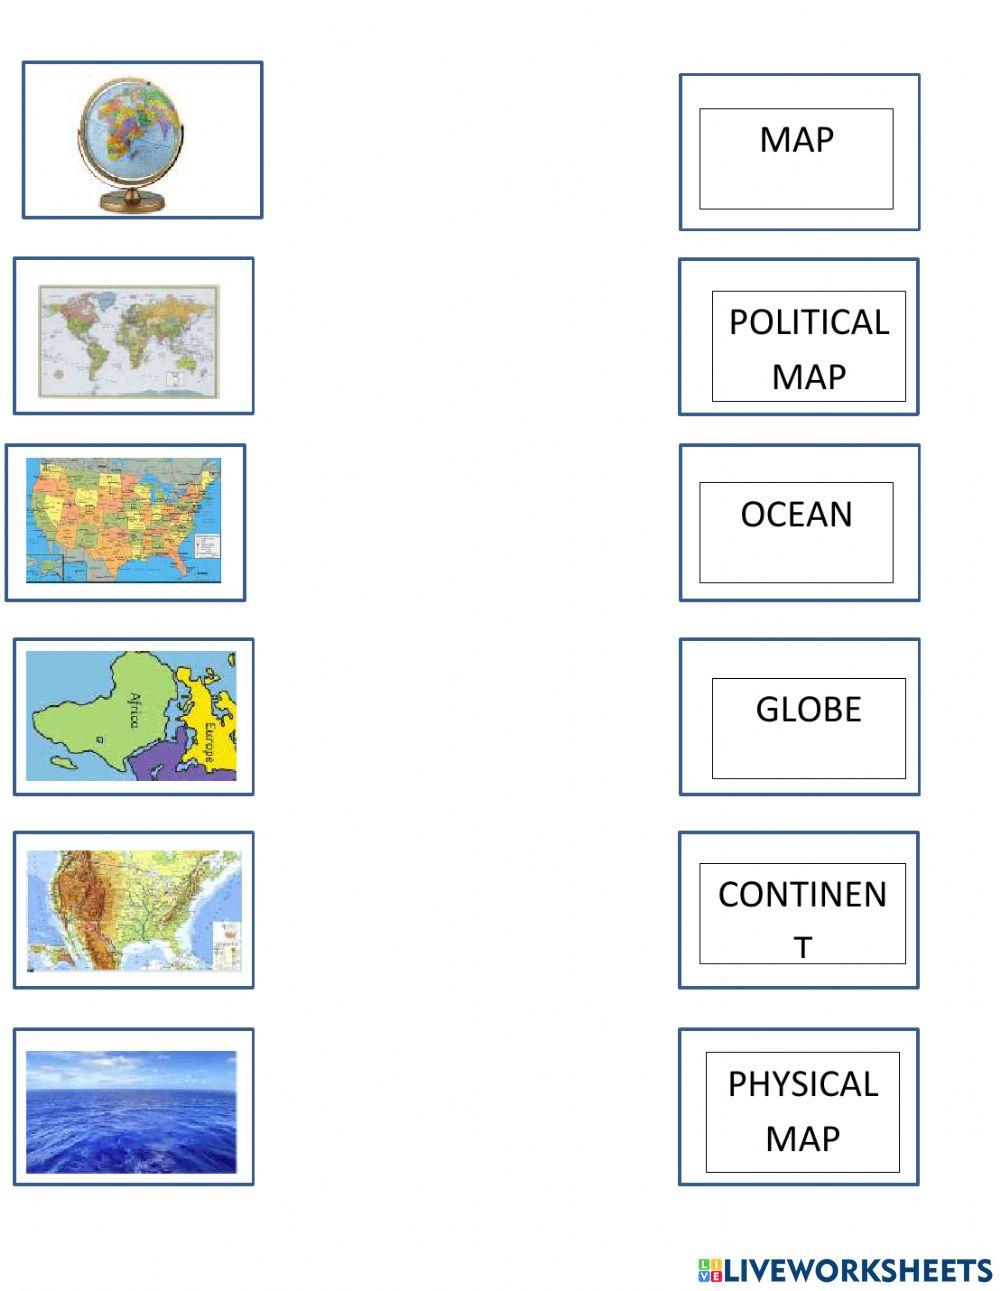 Maps vocabulary 1